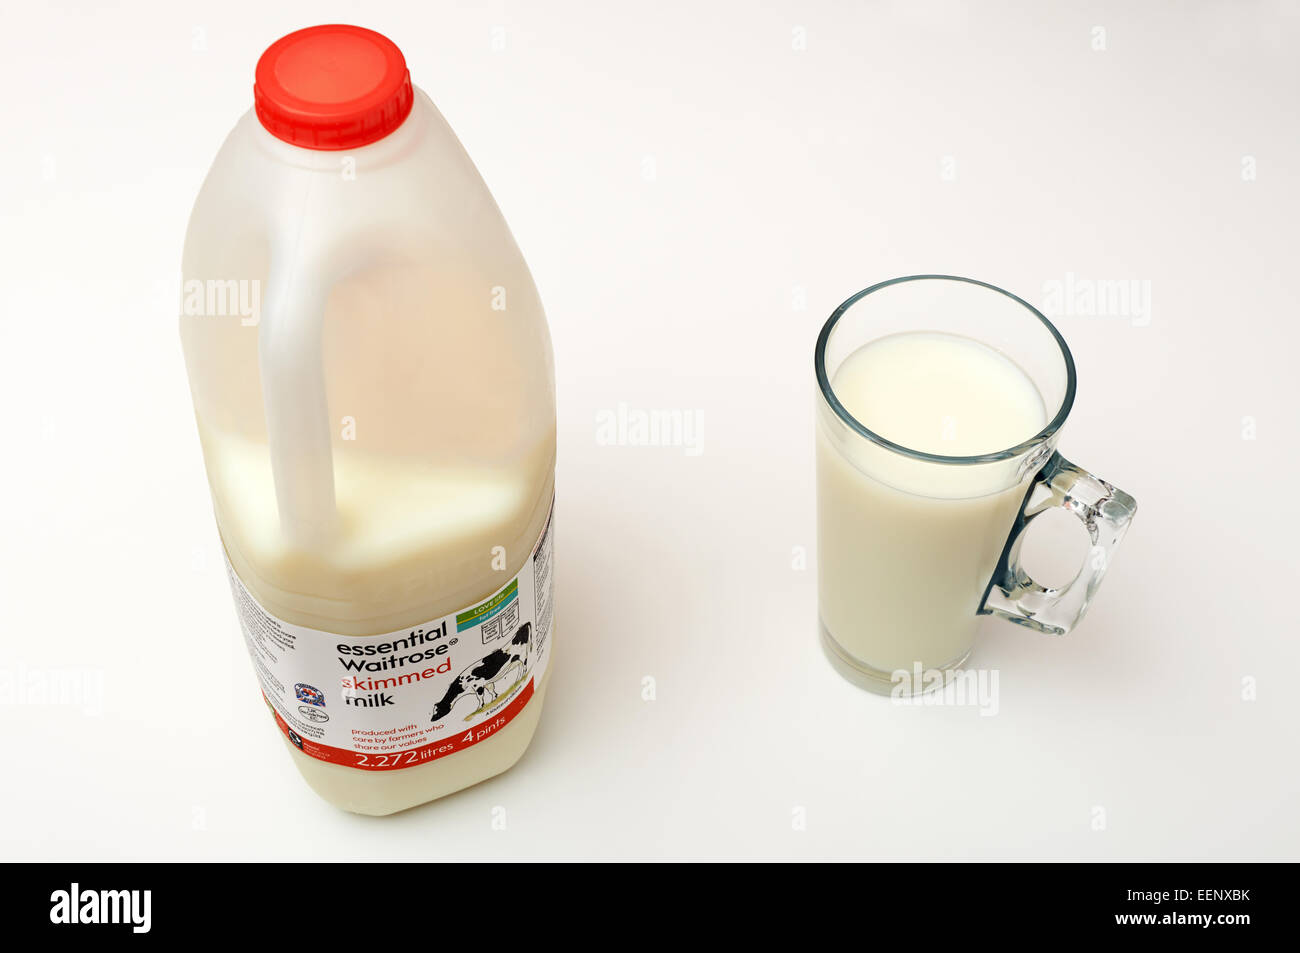 4 pints of Essential Waitrose skimmed milk Stock Photo